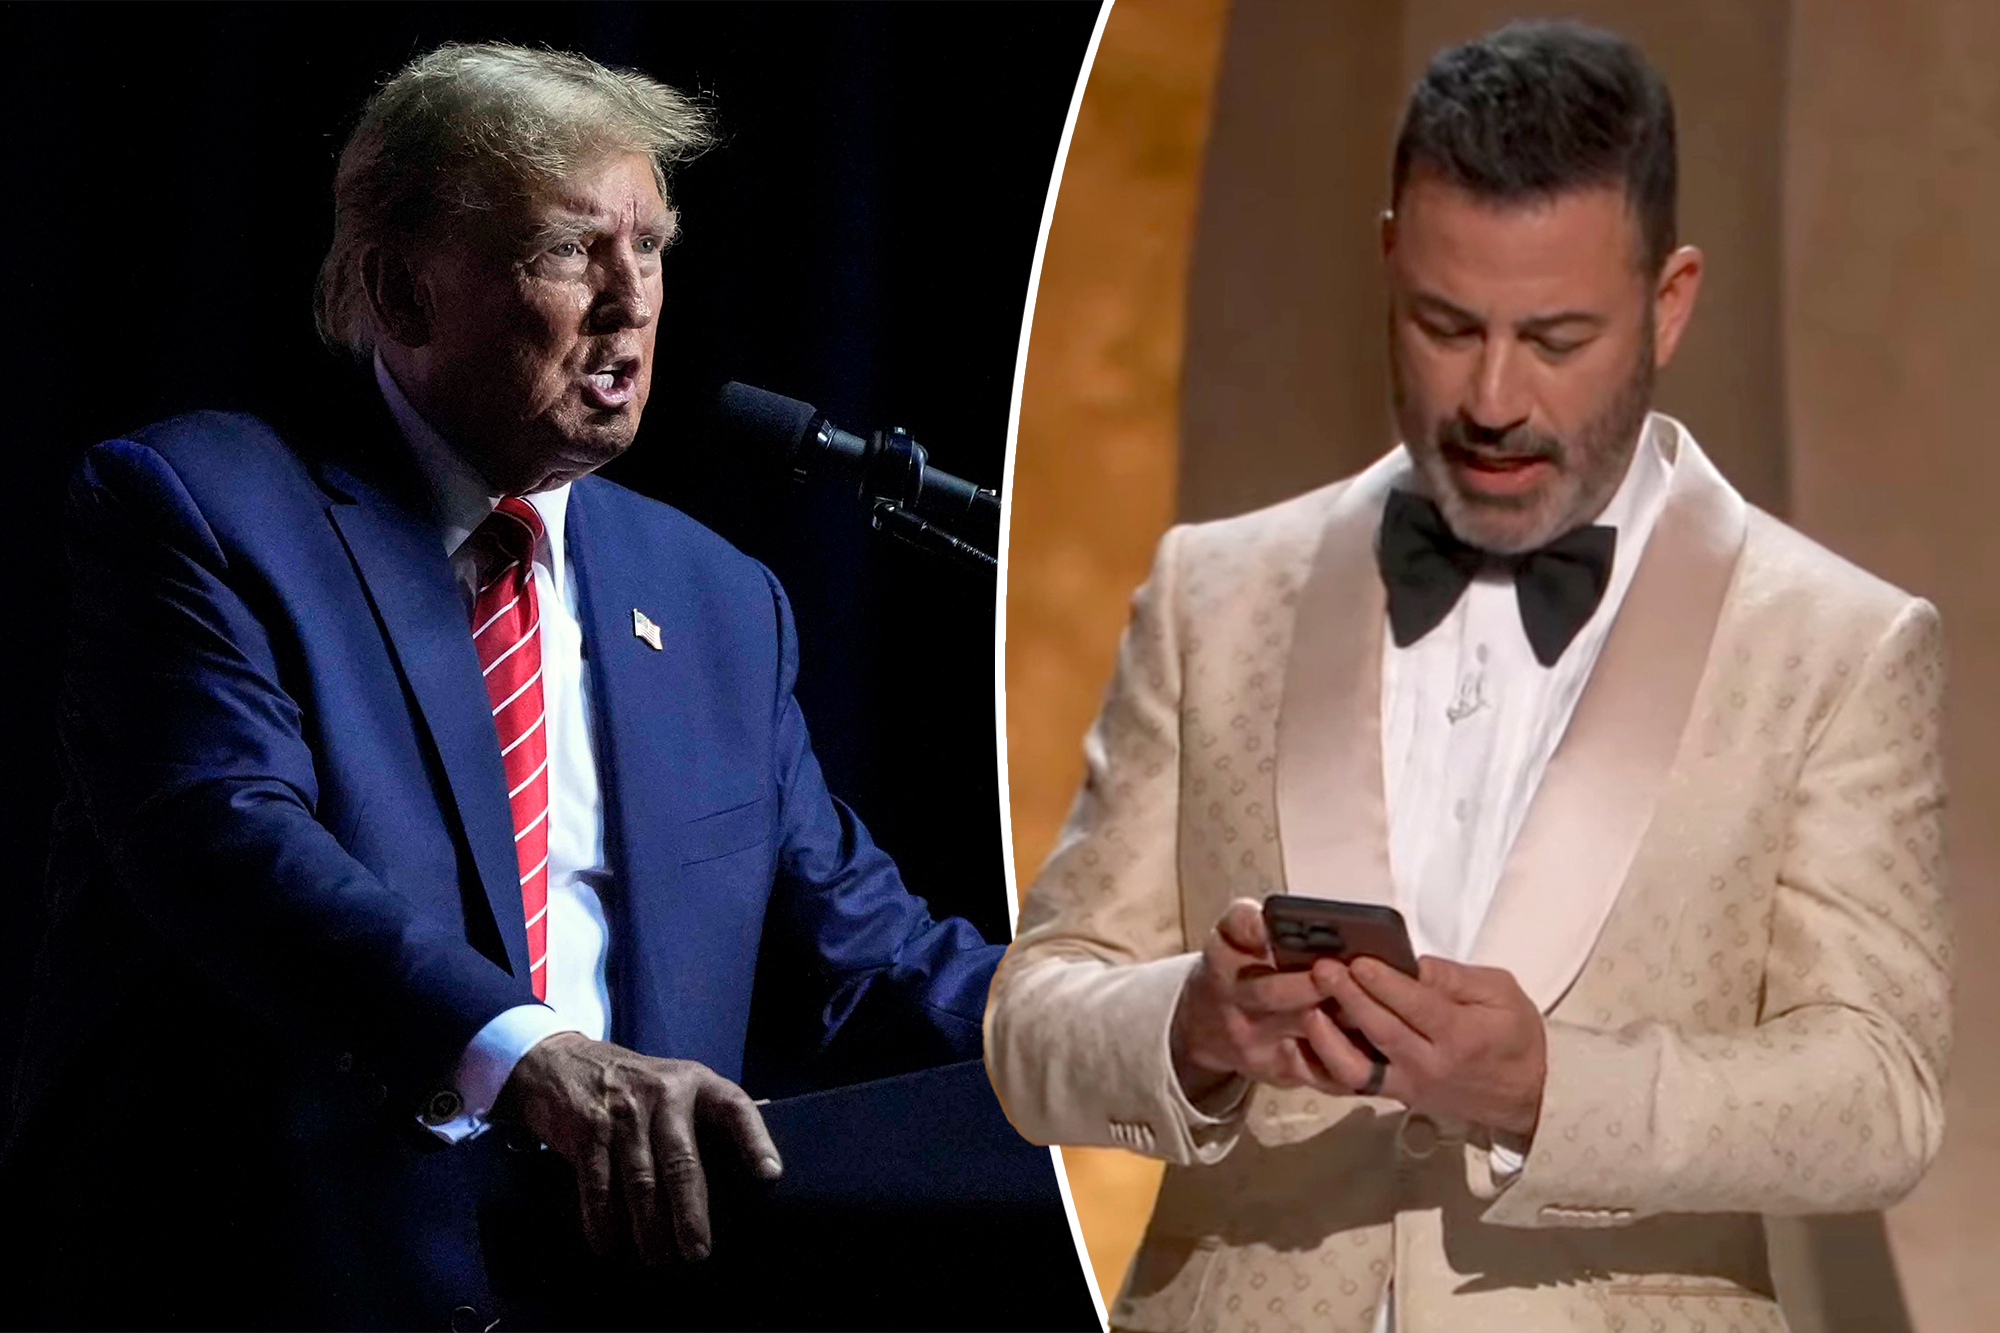 A split of Donald Trump and Jimmy Kimmel hosting the Oscars.